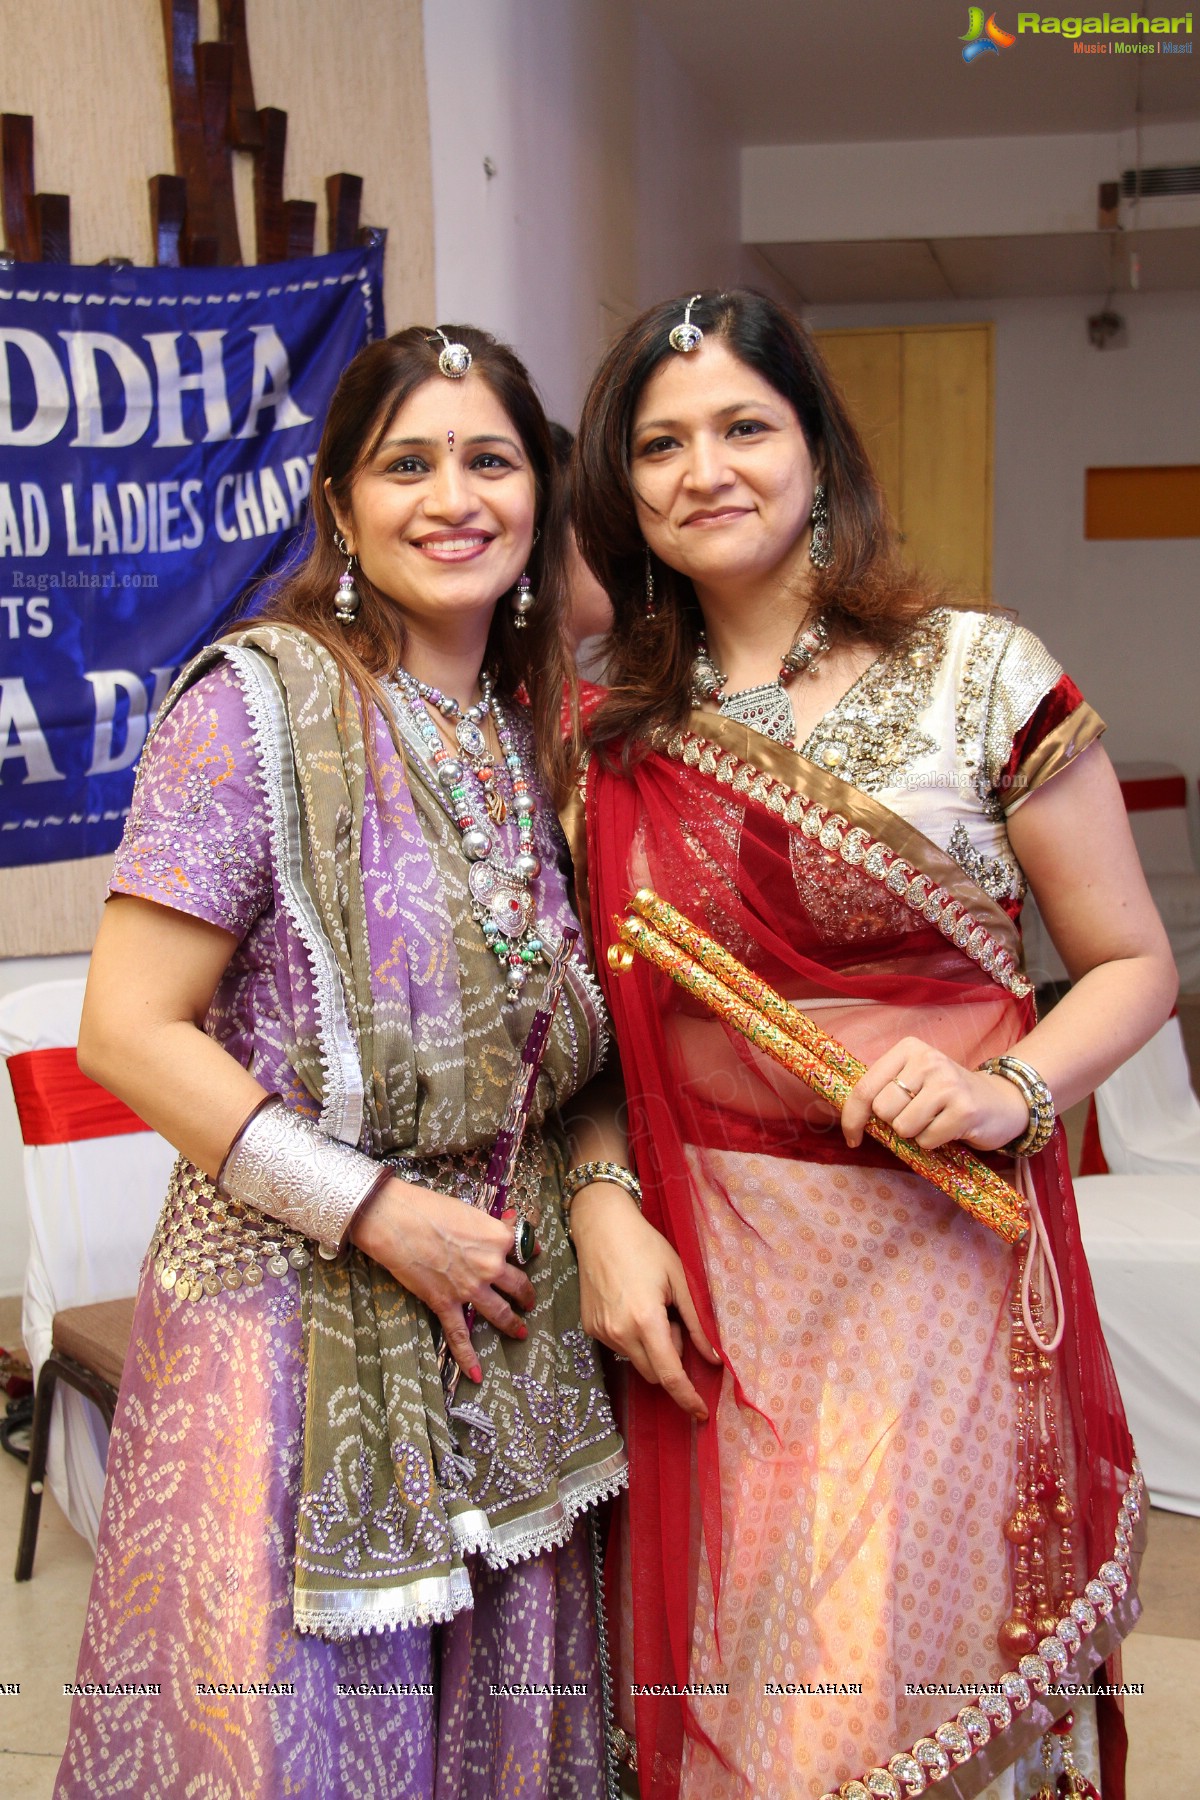 Shraddha Hyderabad-Secunderabad Ladies Chapter's Dandiya Dhamal